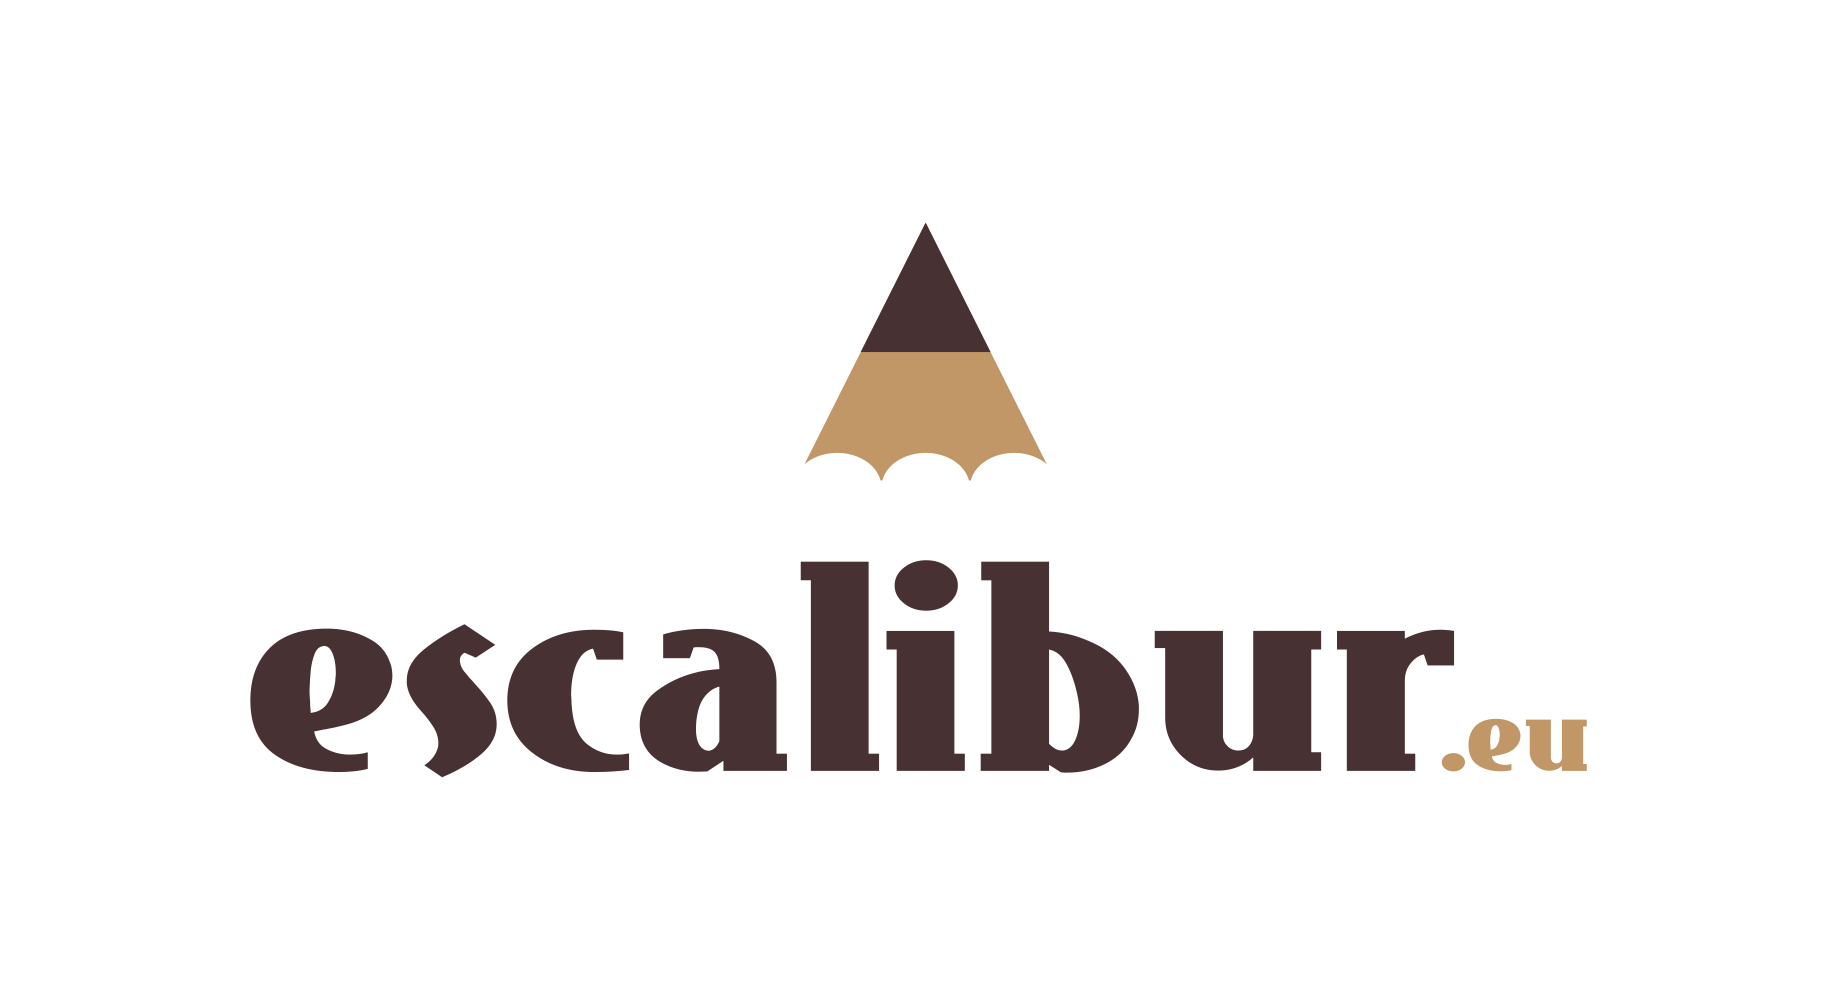 Escalibur_logo